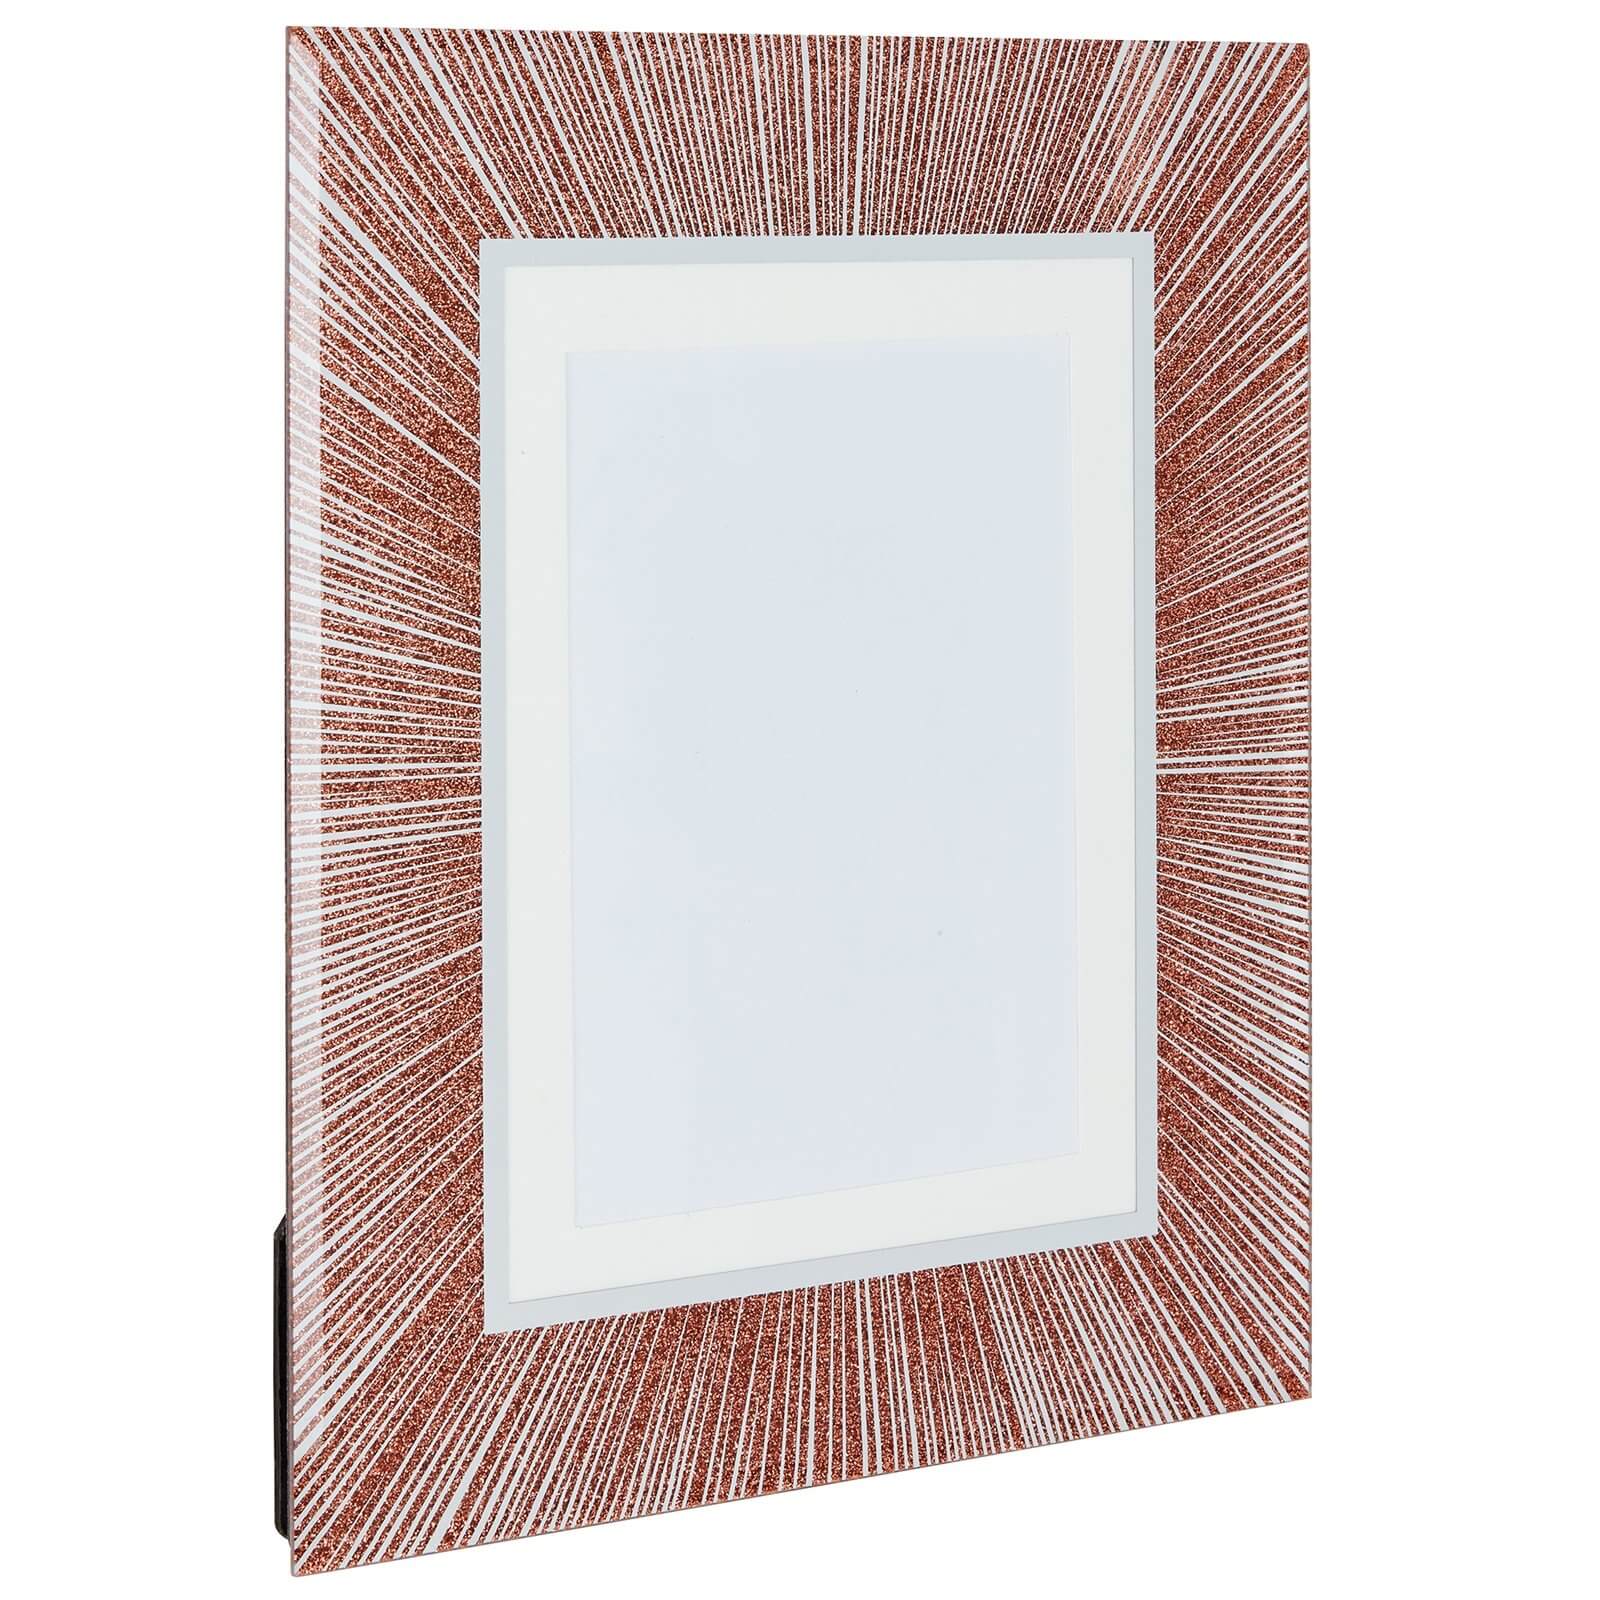 Glitter Picture Frame 7 x 5 - Copper